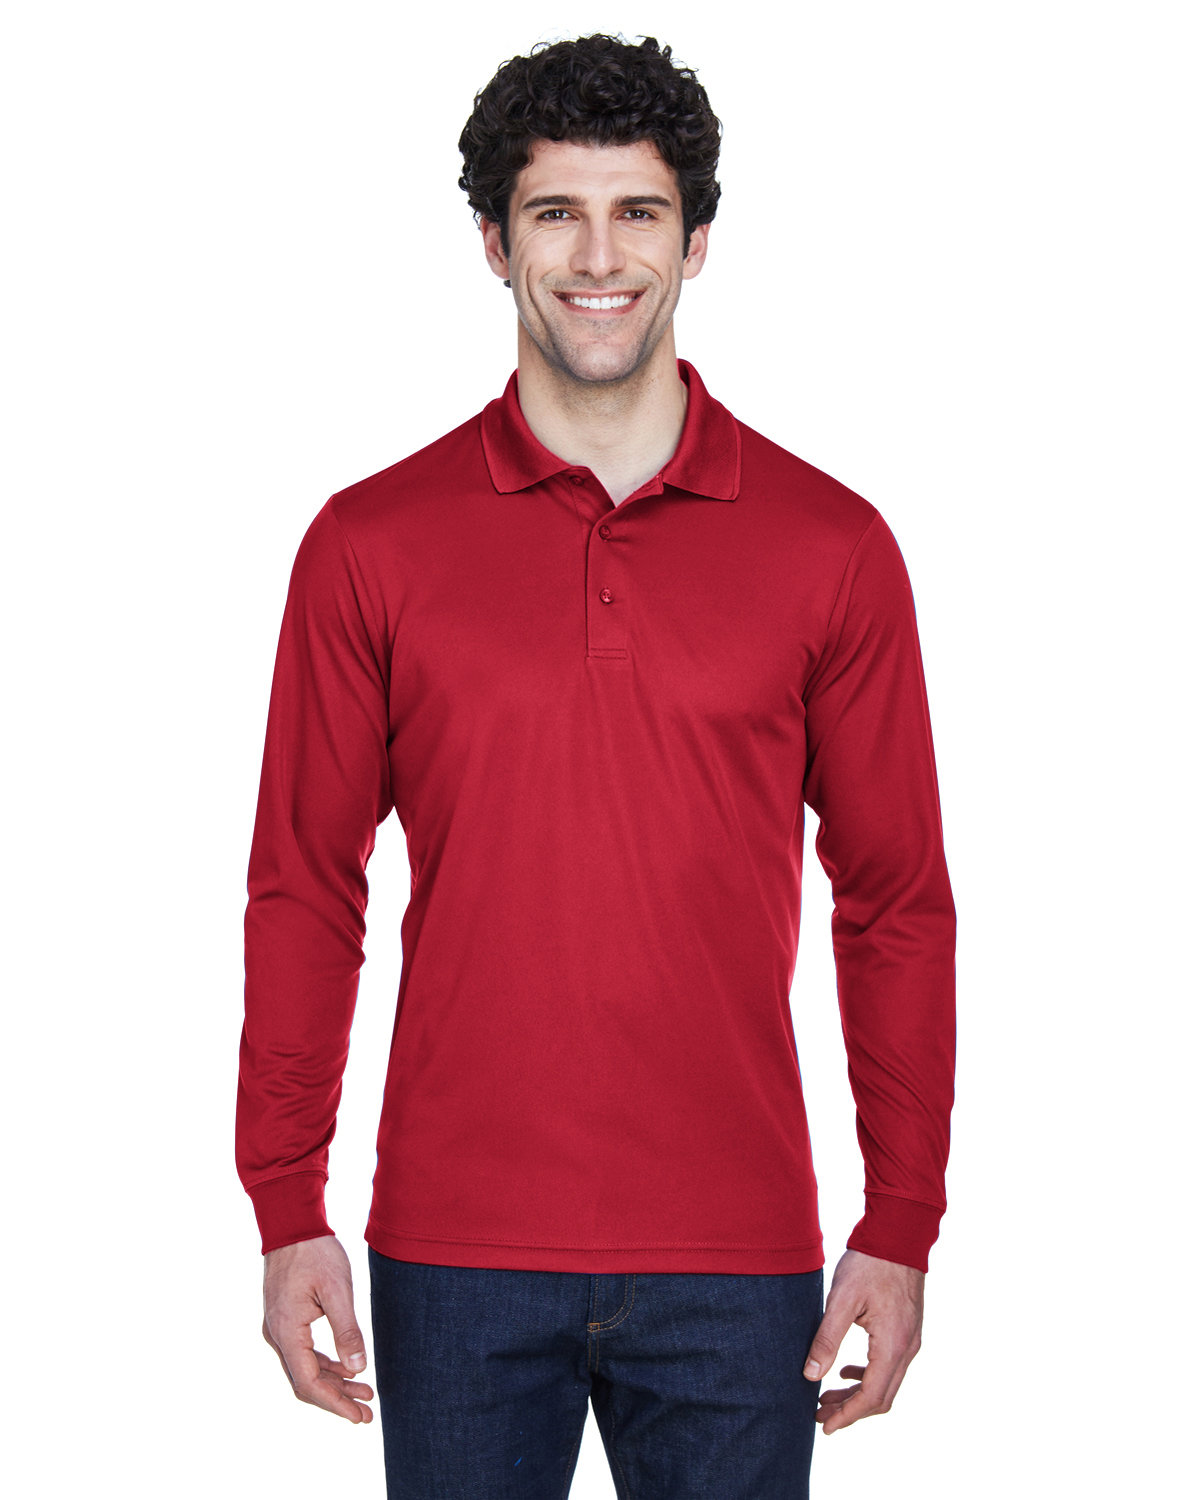 Core 365 Men's Pinnacle Performance Long-Sleeve Piqué Polo CLASSIC RED 